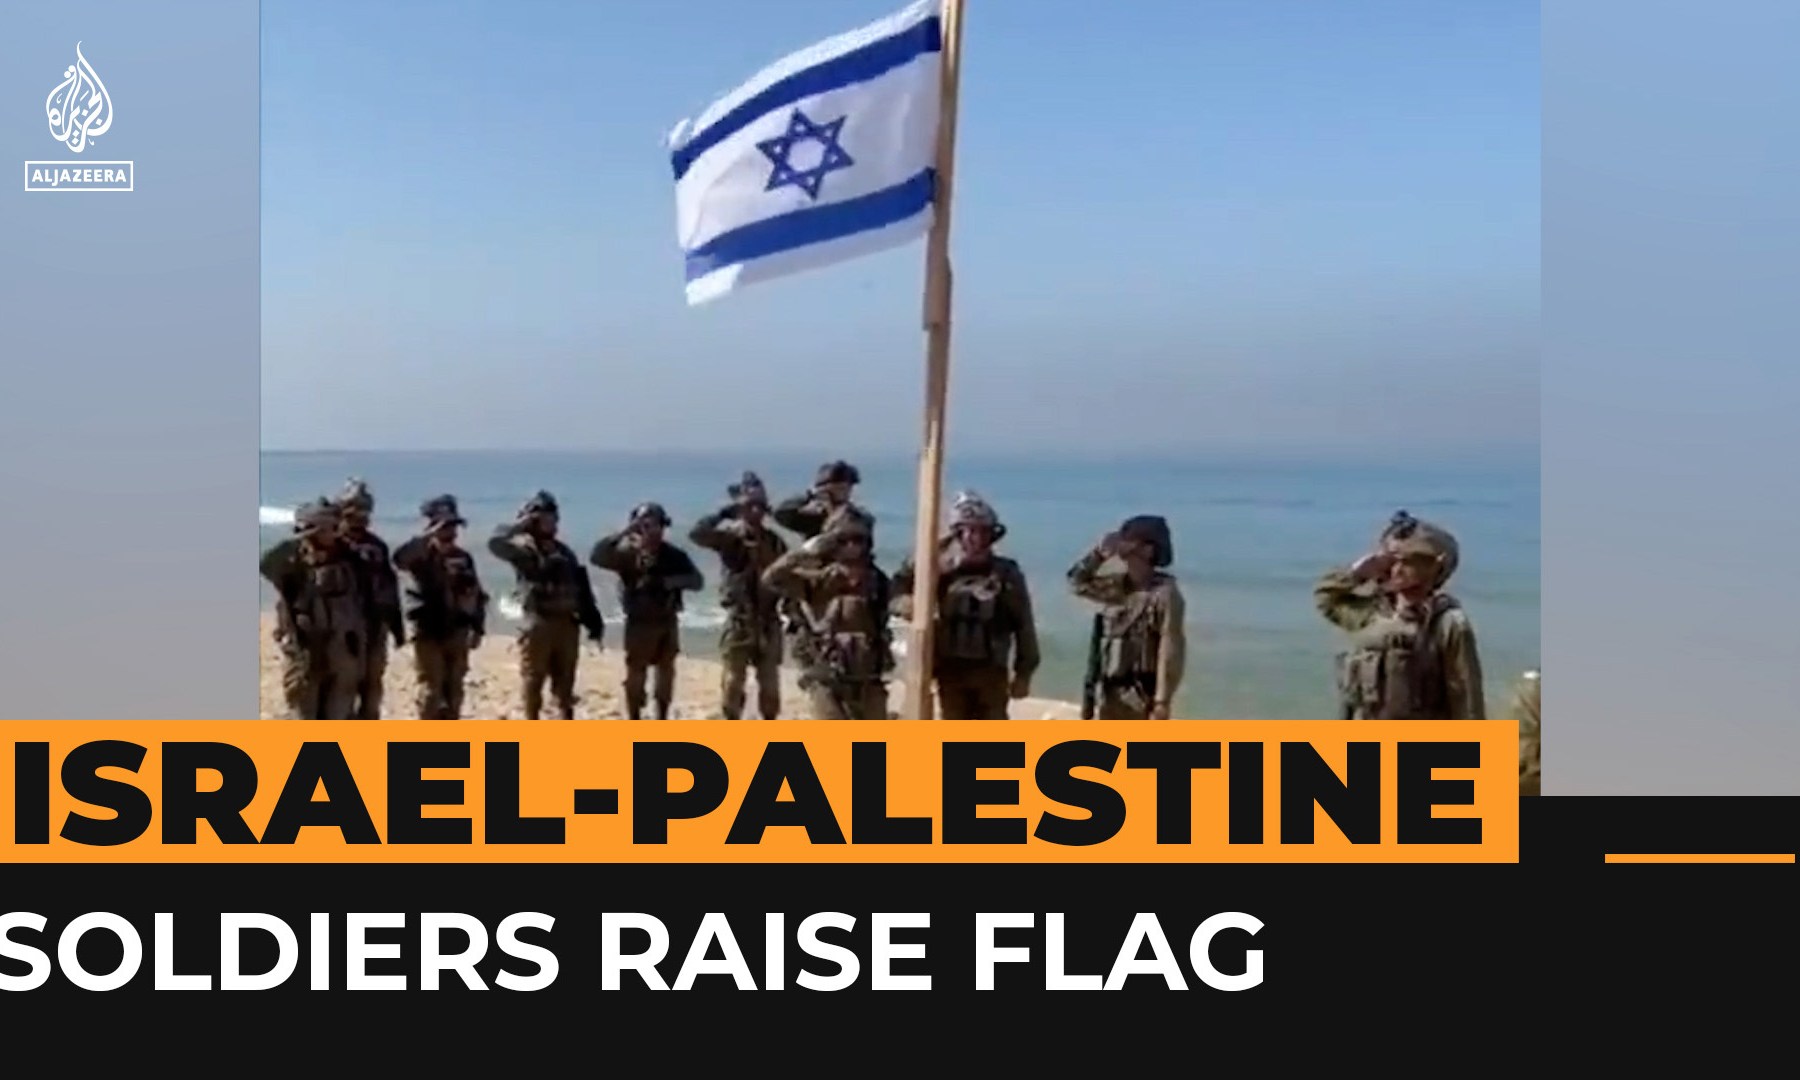 Israeli soldiers raise flag and sing anthem on Gaza beach